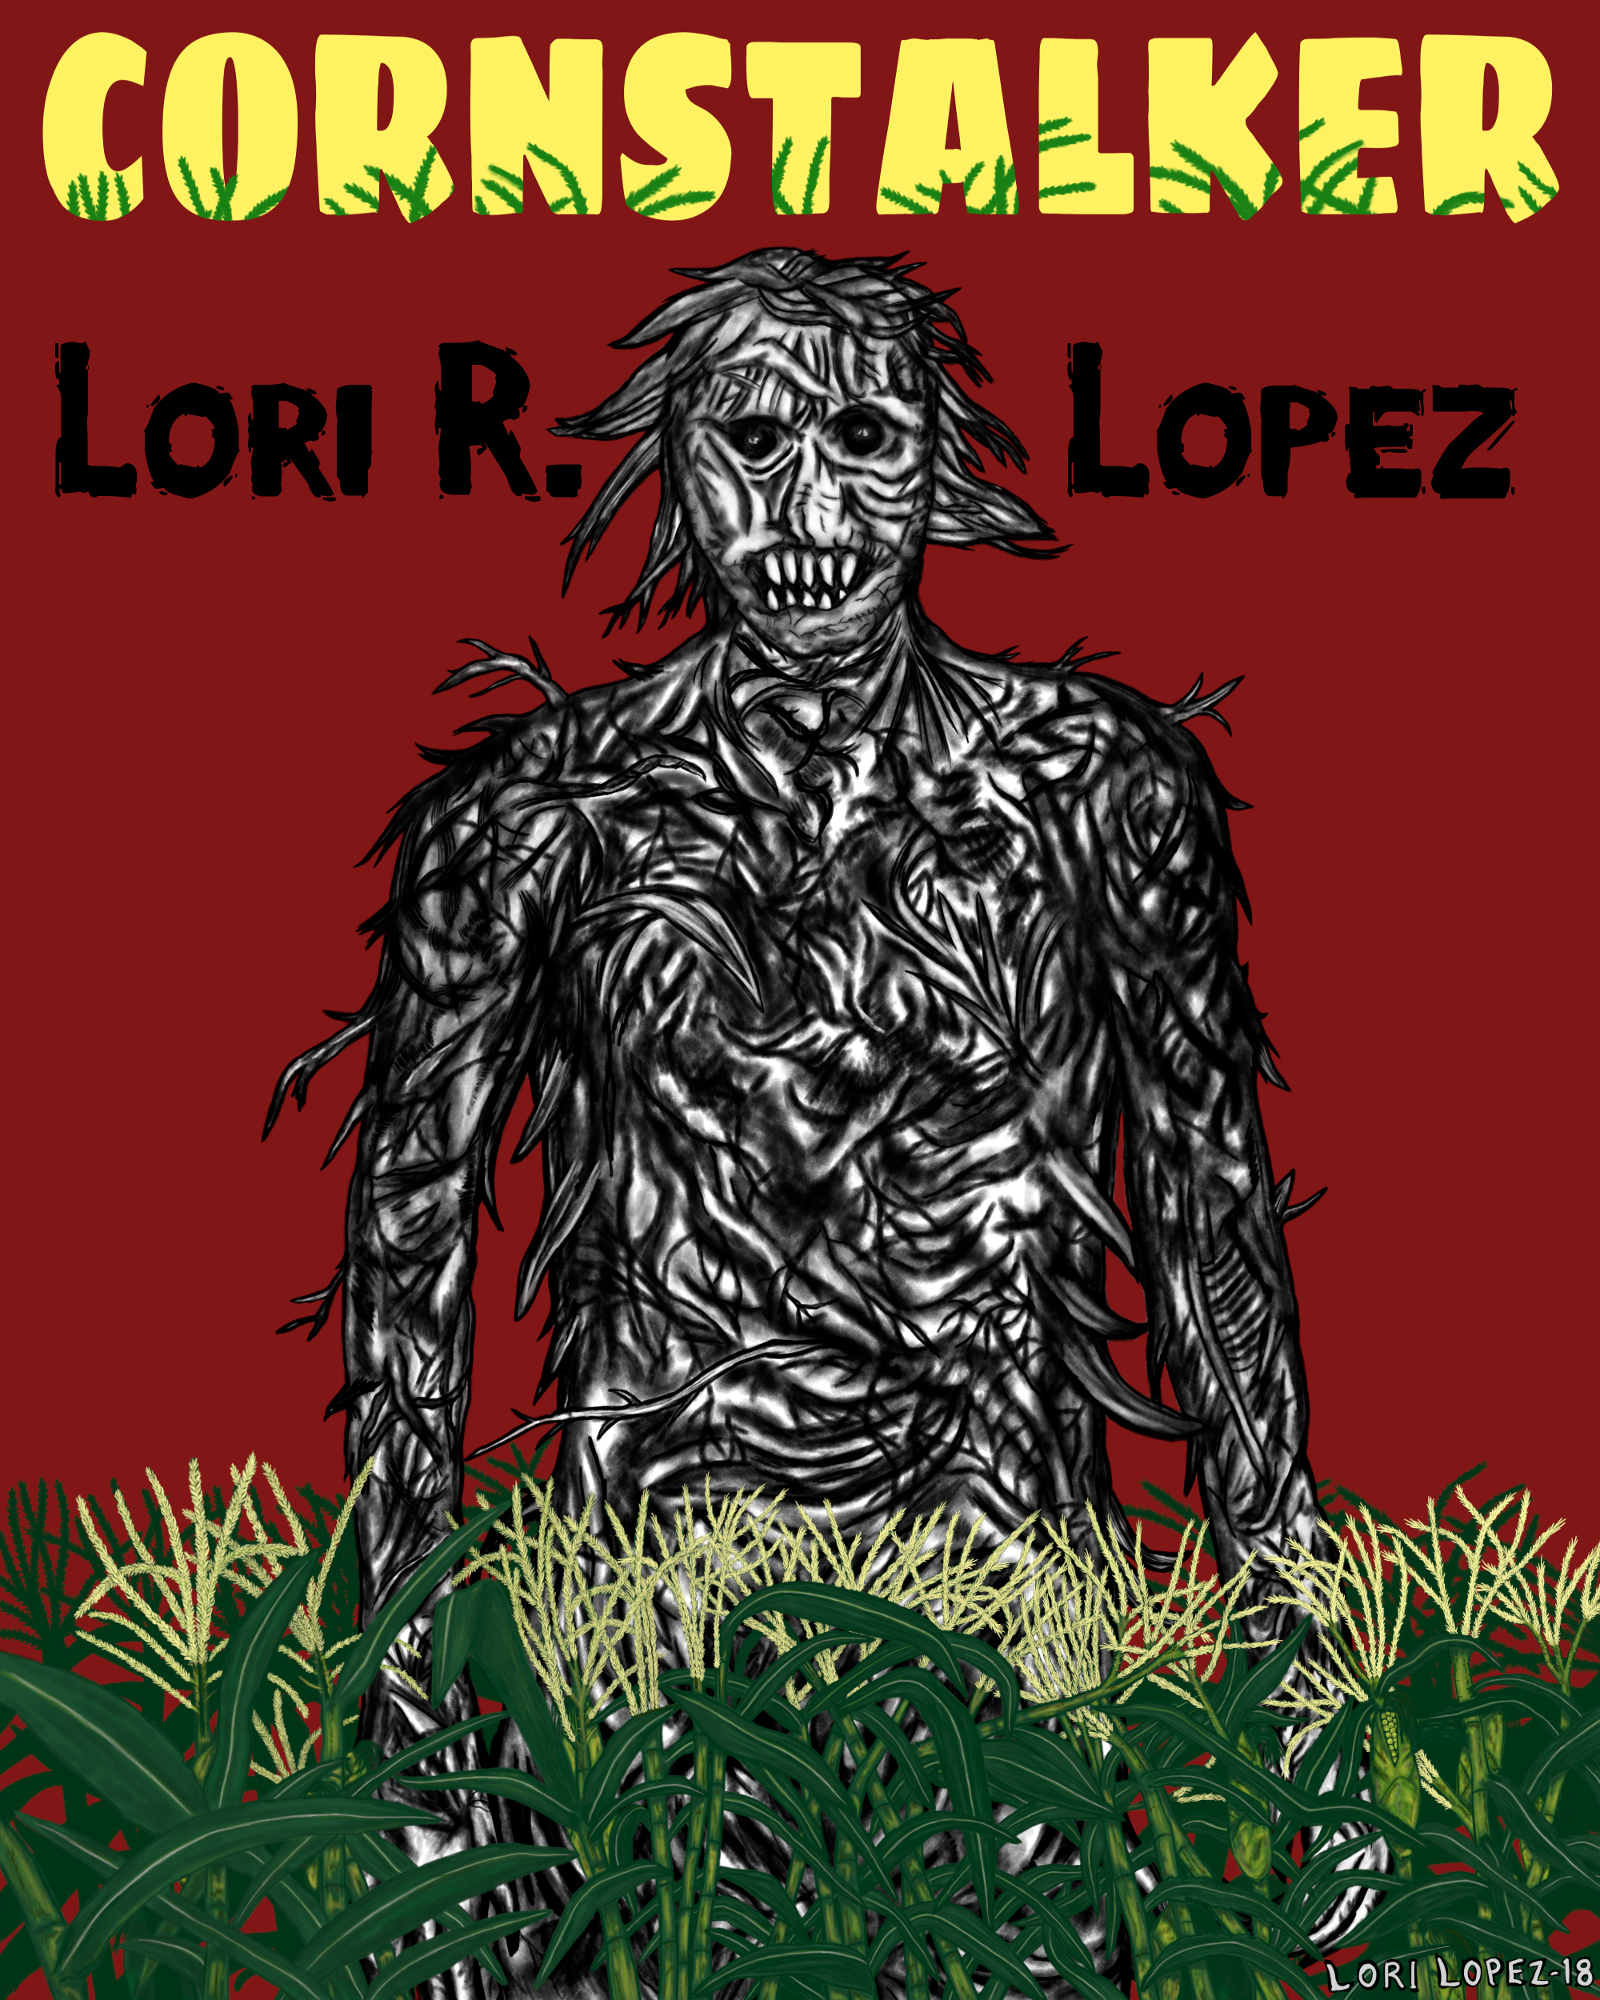 The Art of Lori R. Lopez 17